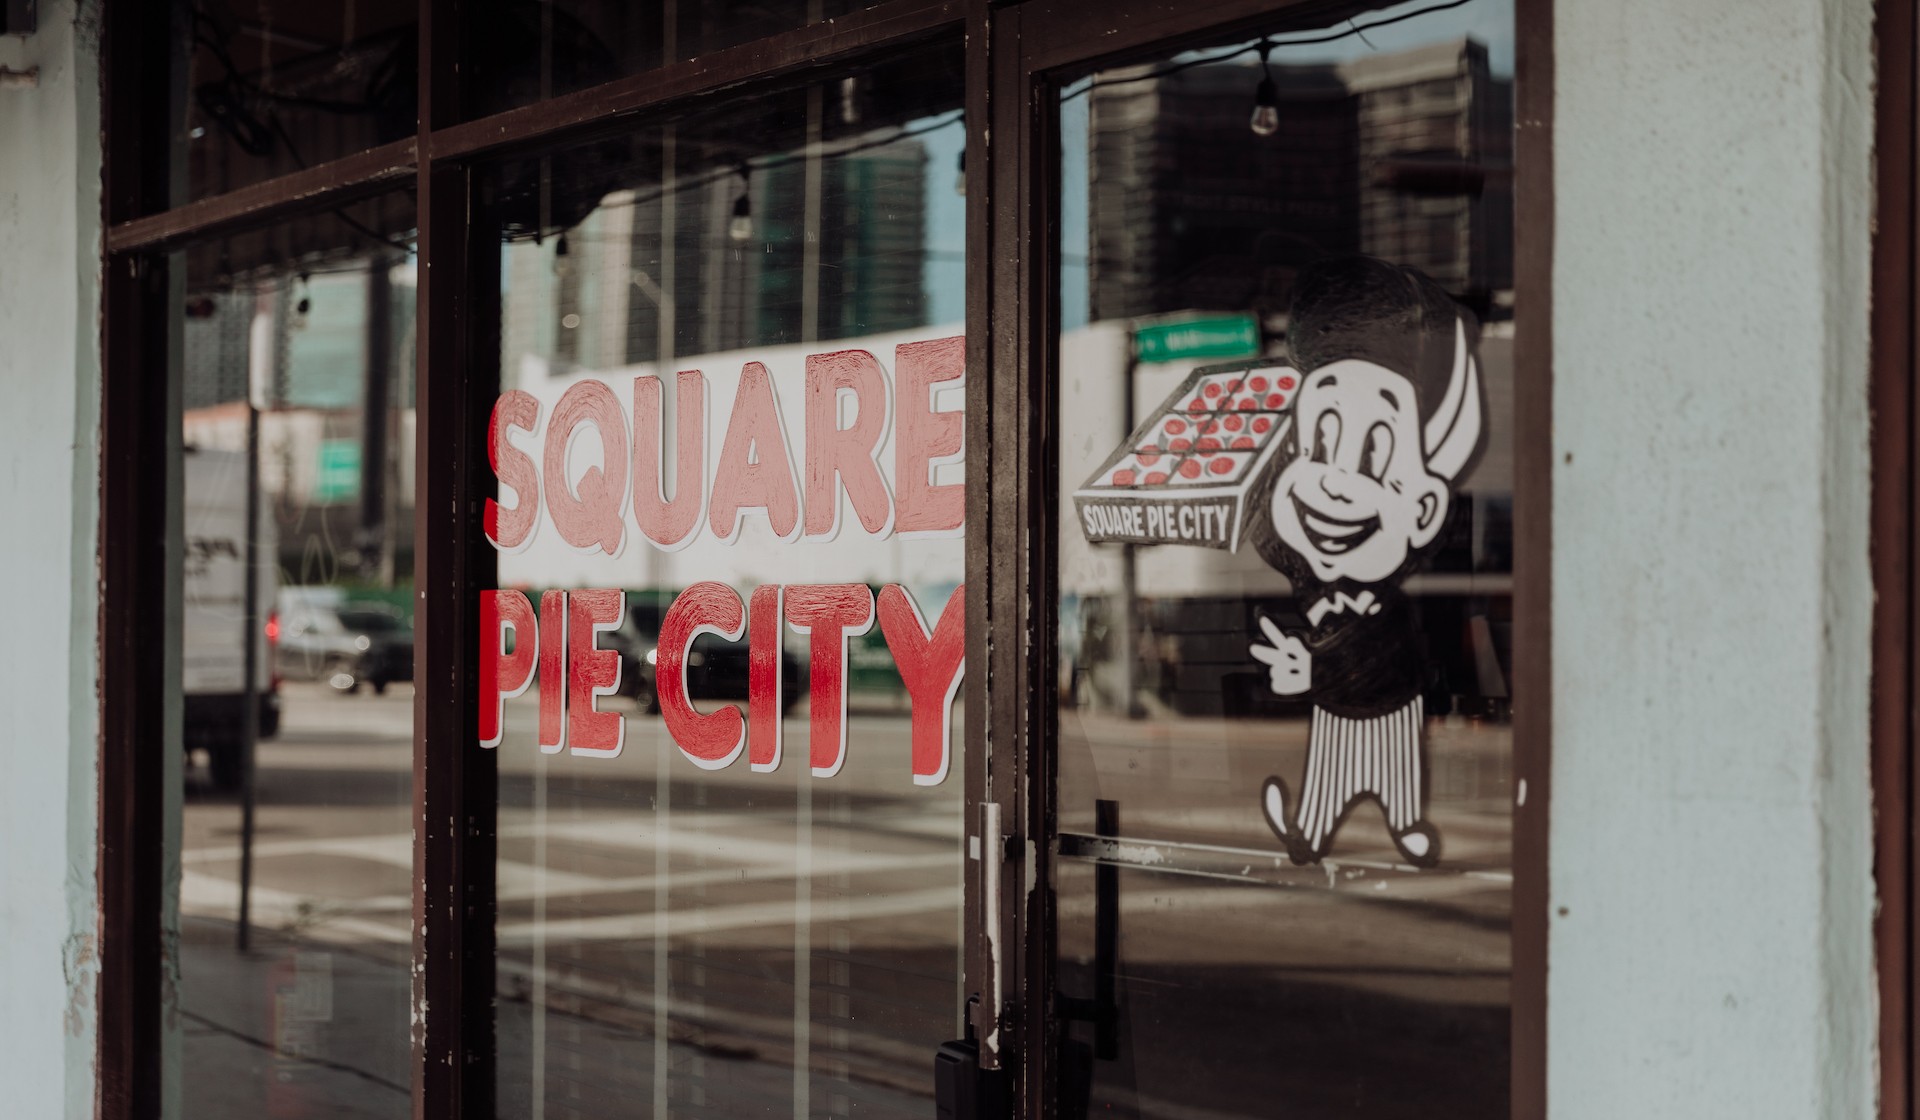 Square Pie City Image